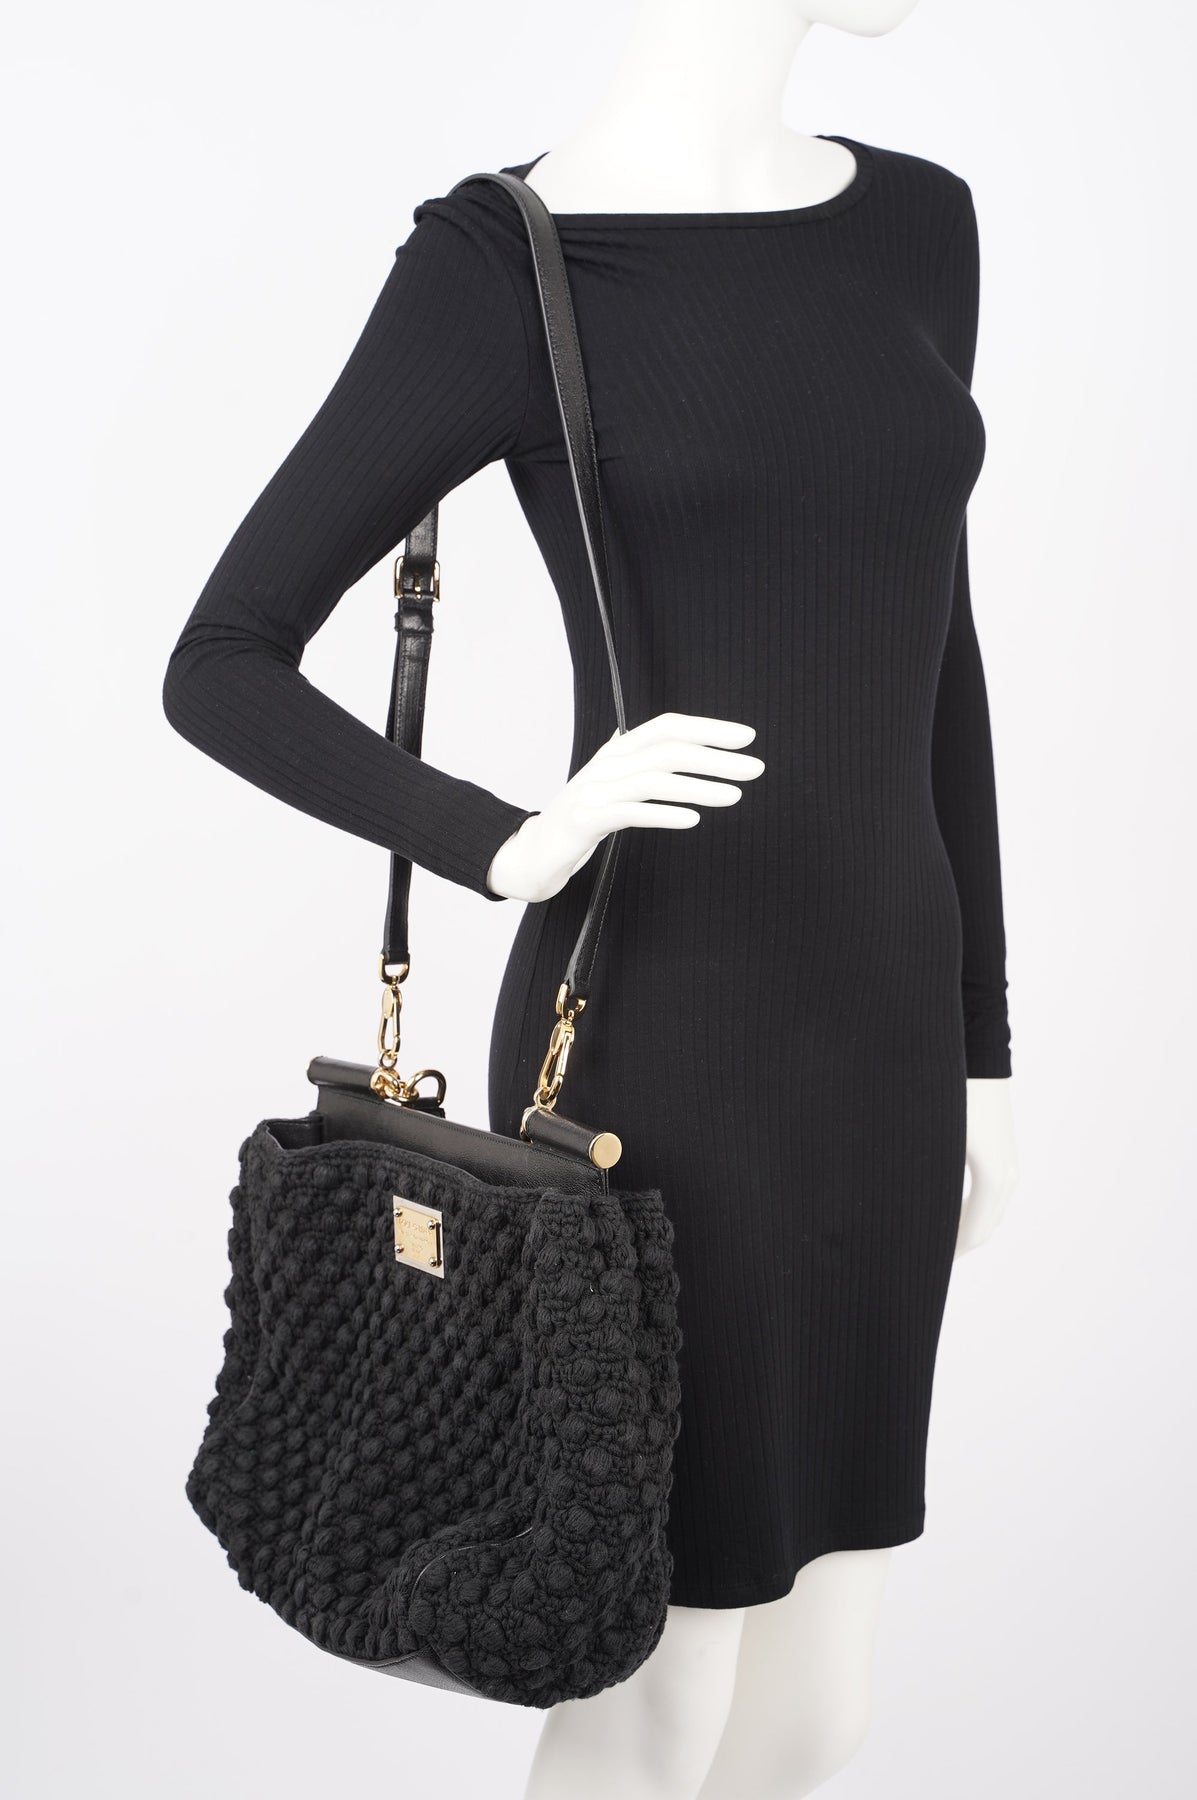 DOLCE & GABBANA MISS SICILY Black Knit Crochet over Suede Leather Hand Bag